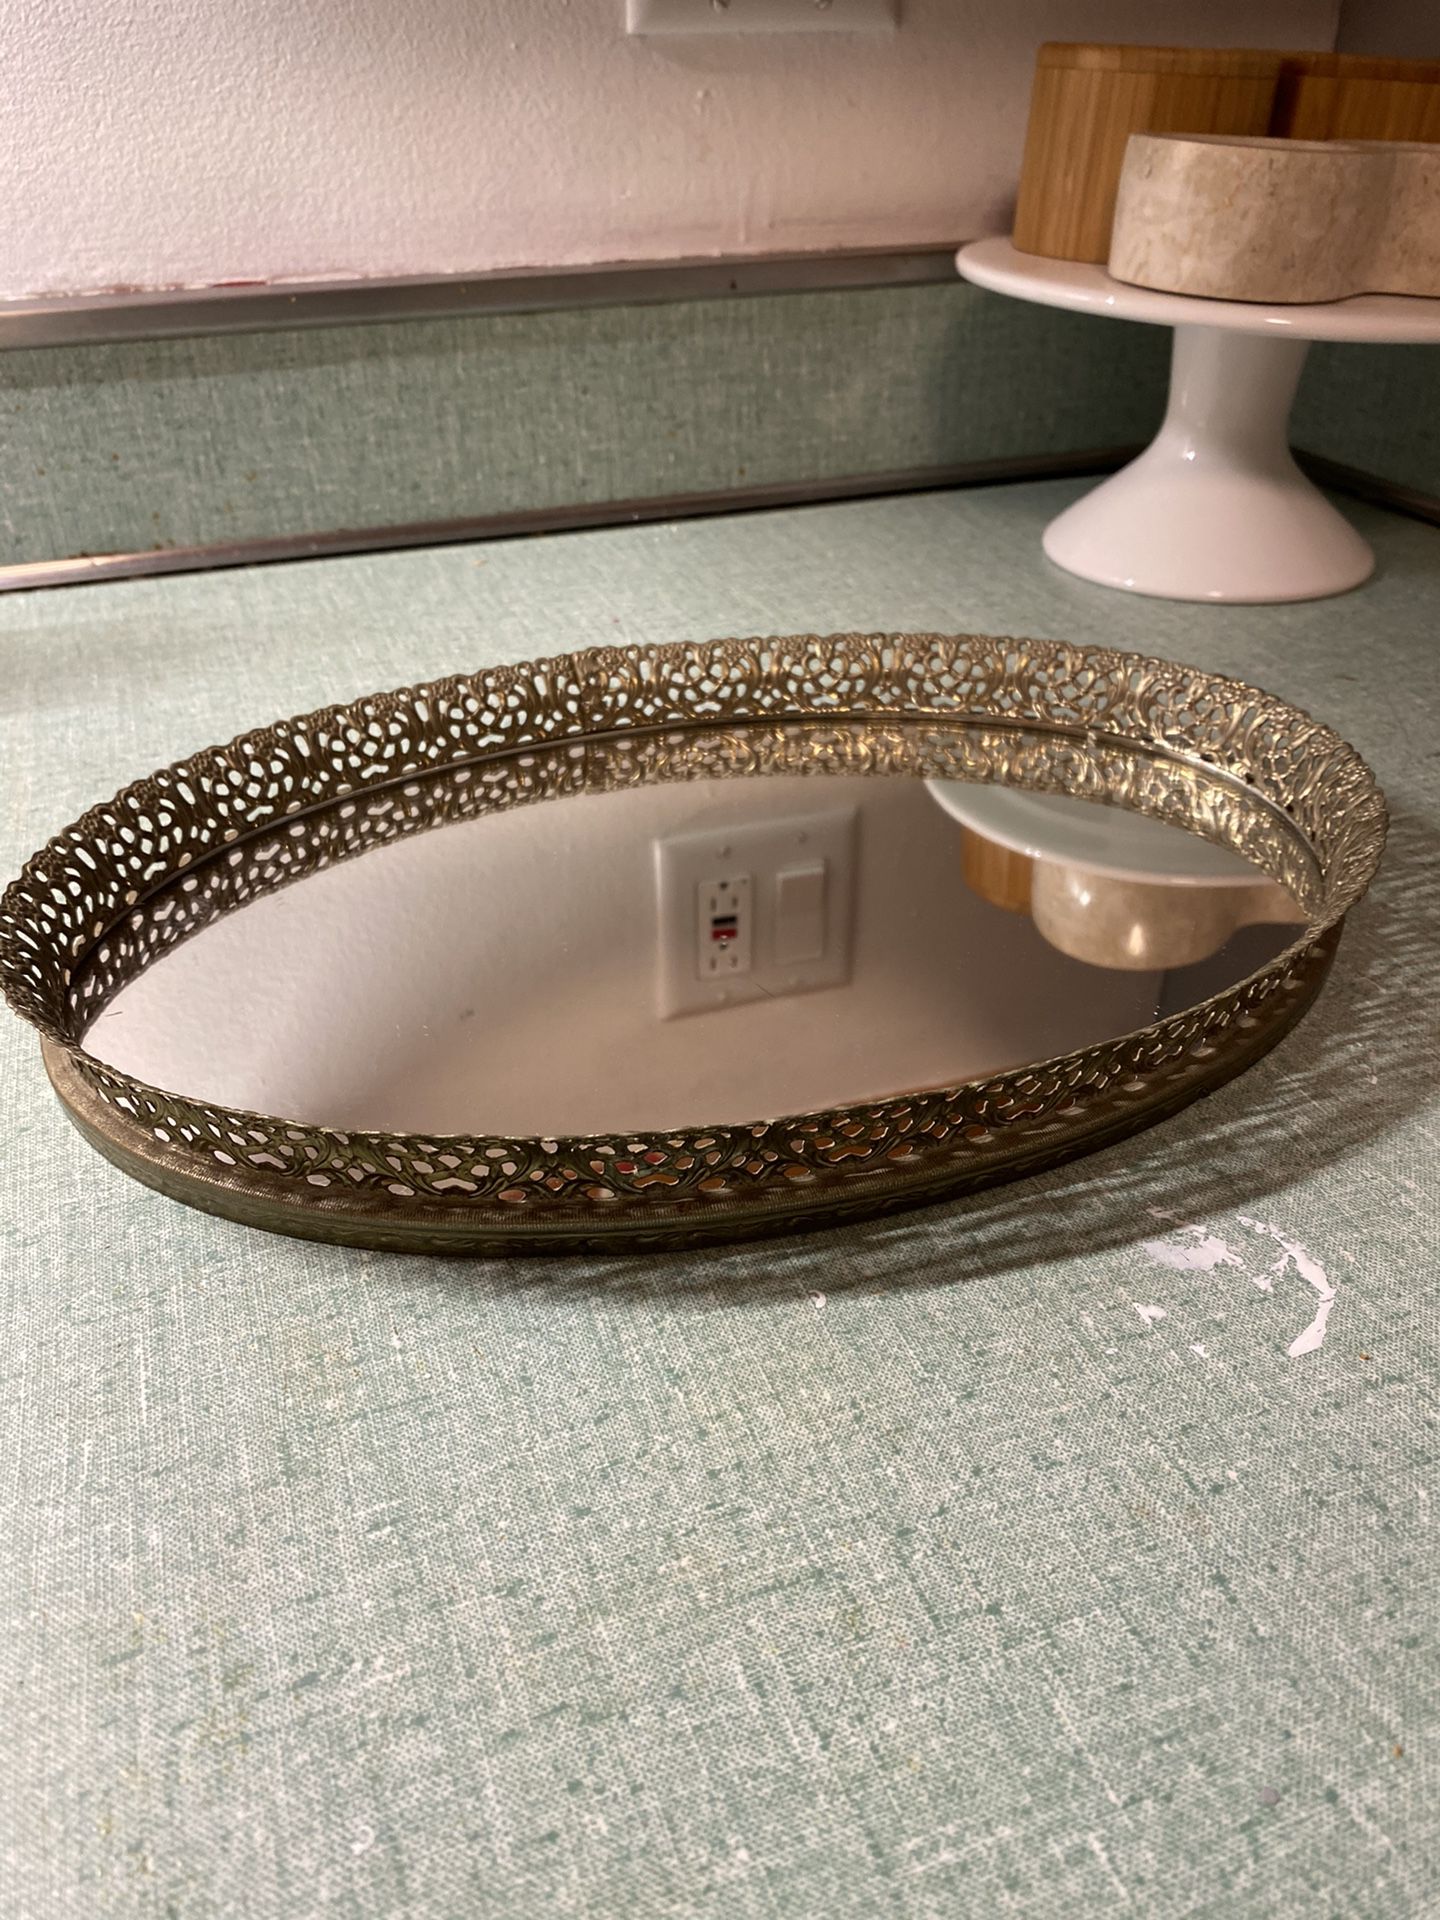 Vanity decorative mirrored tray